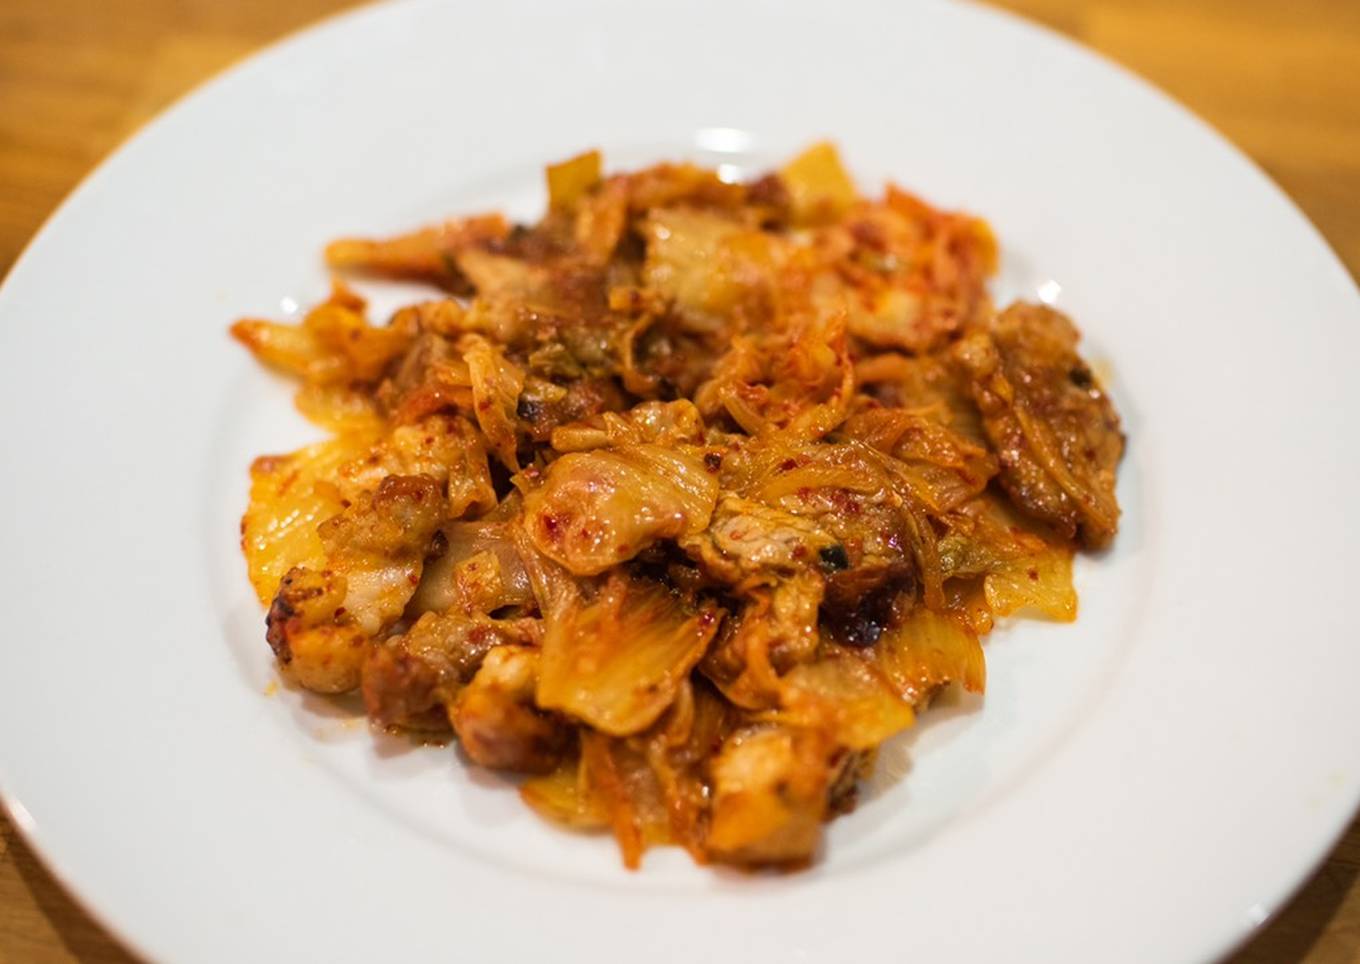 Stir-fried kimchi and pork